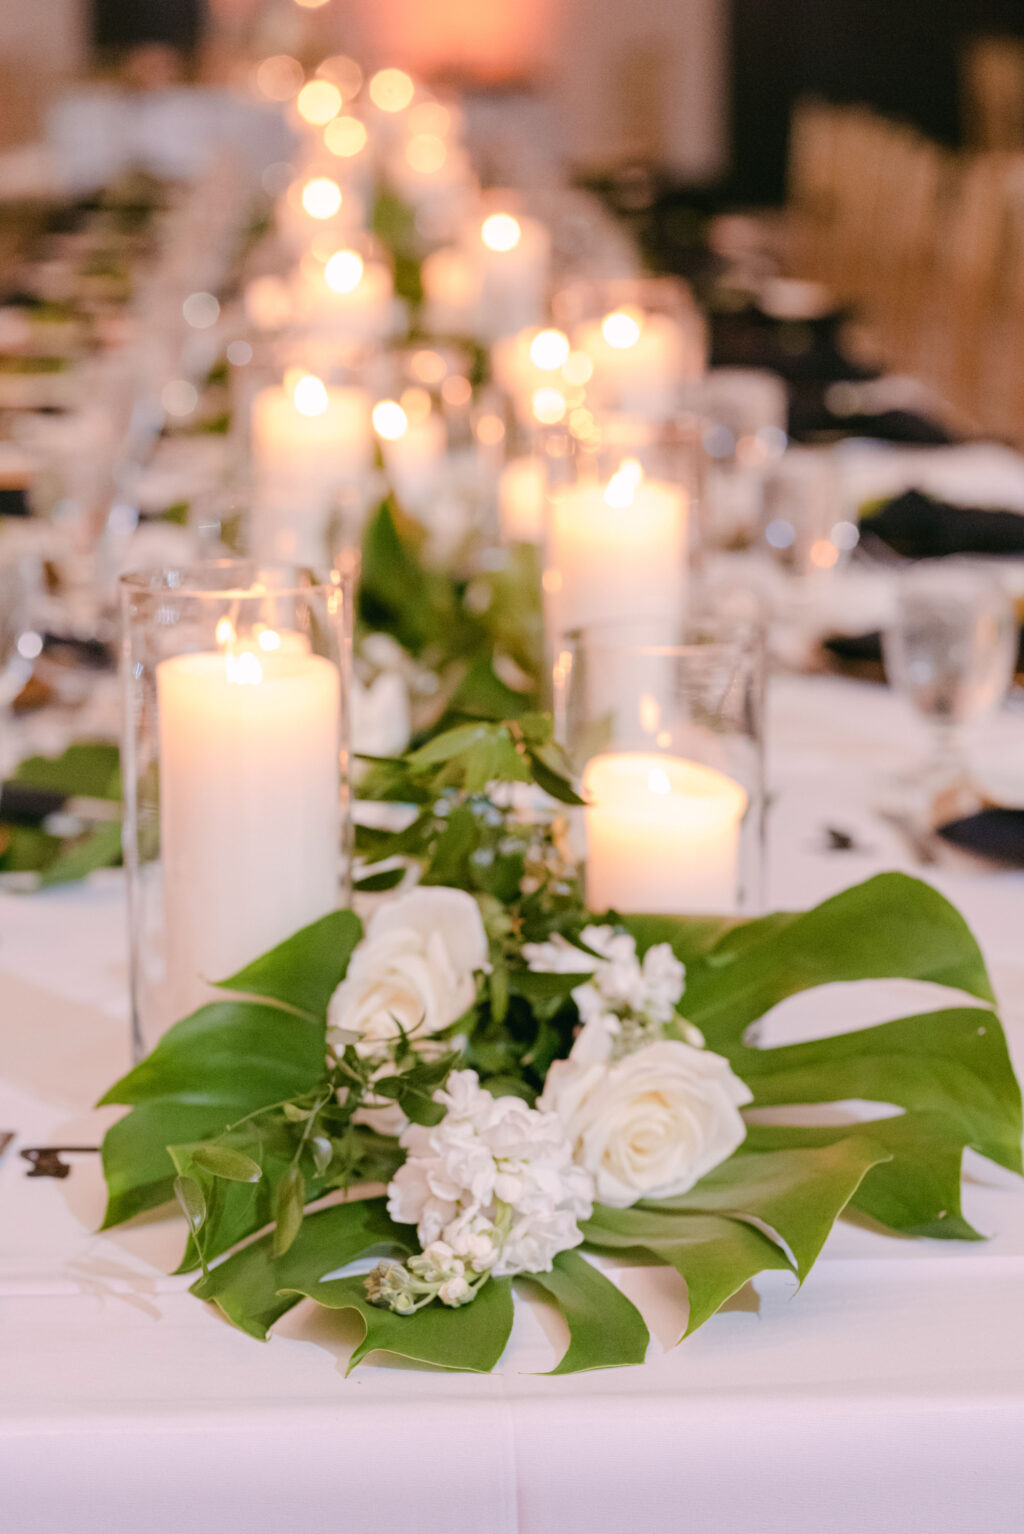 Elegant Monstera Leaf and Candle Wedding Reception Centerpiece Ideas